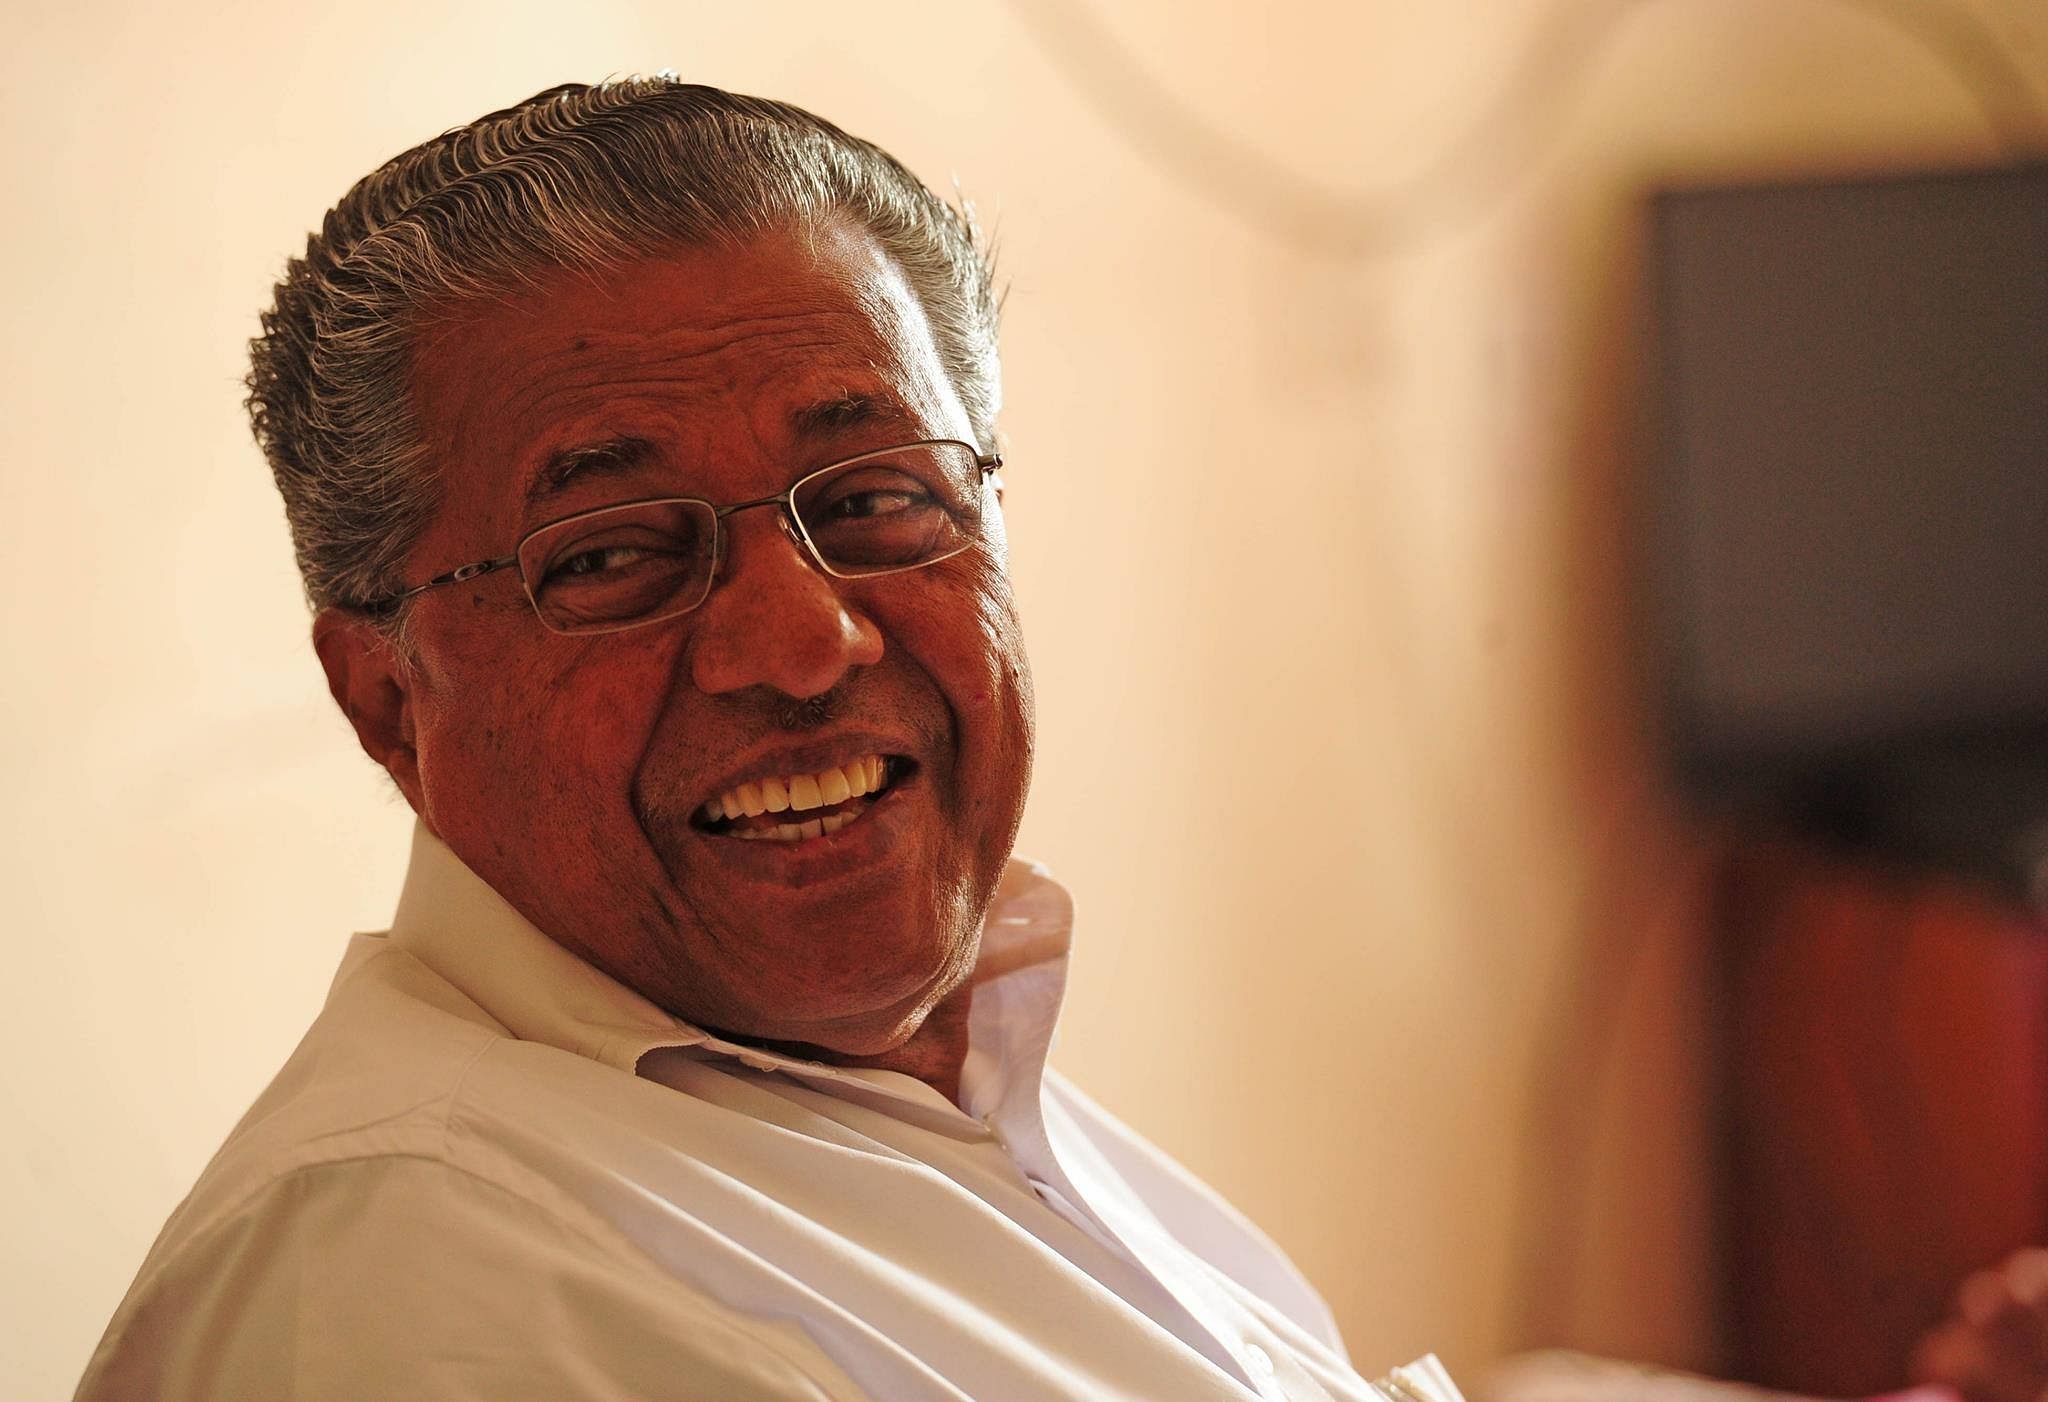 Kerala Chief Minister and senior CPM leader Pinarayi Vijayan has now backed Mr. Rai's beliefs